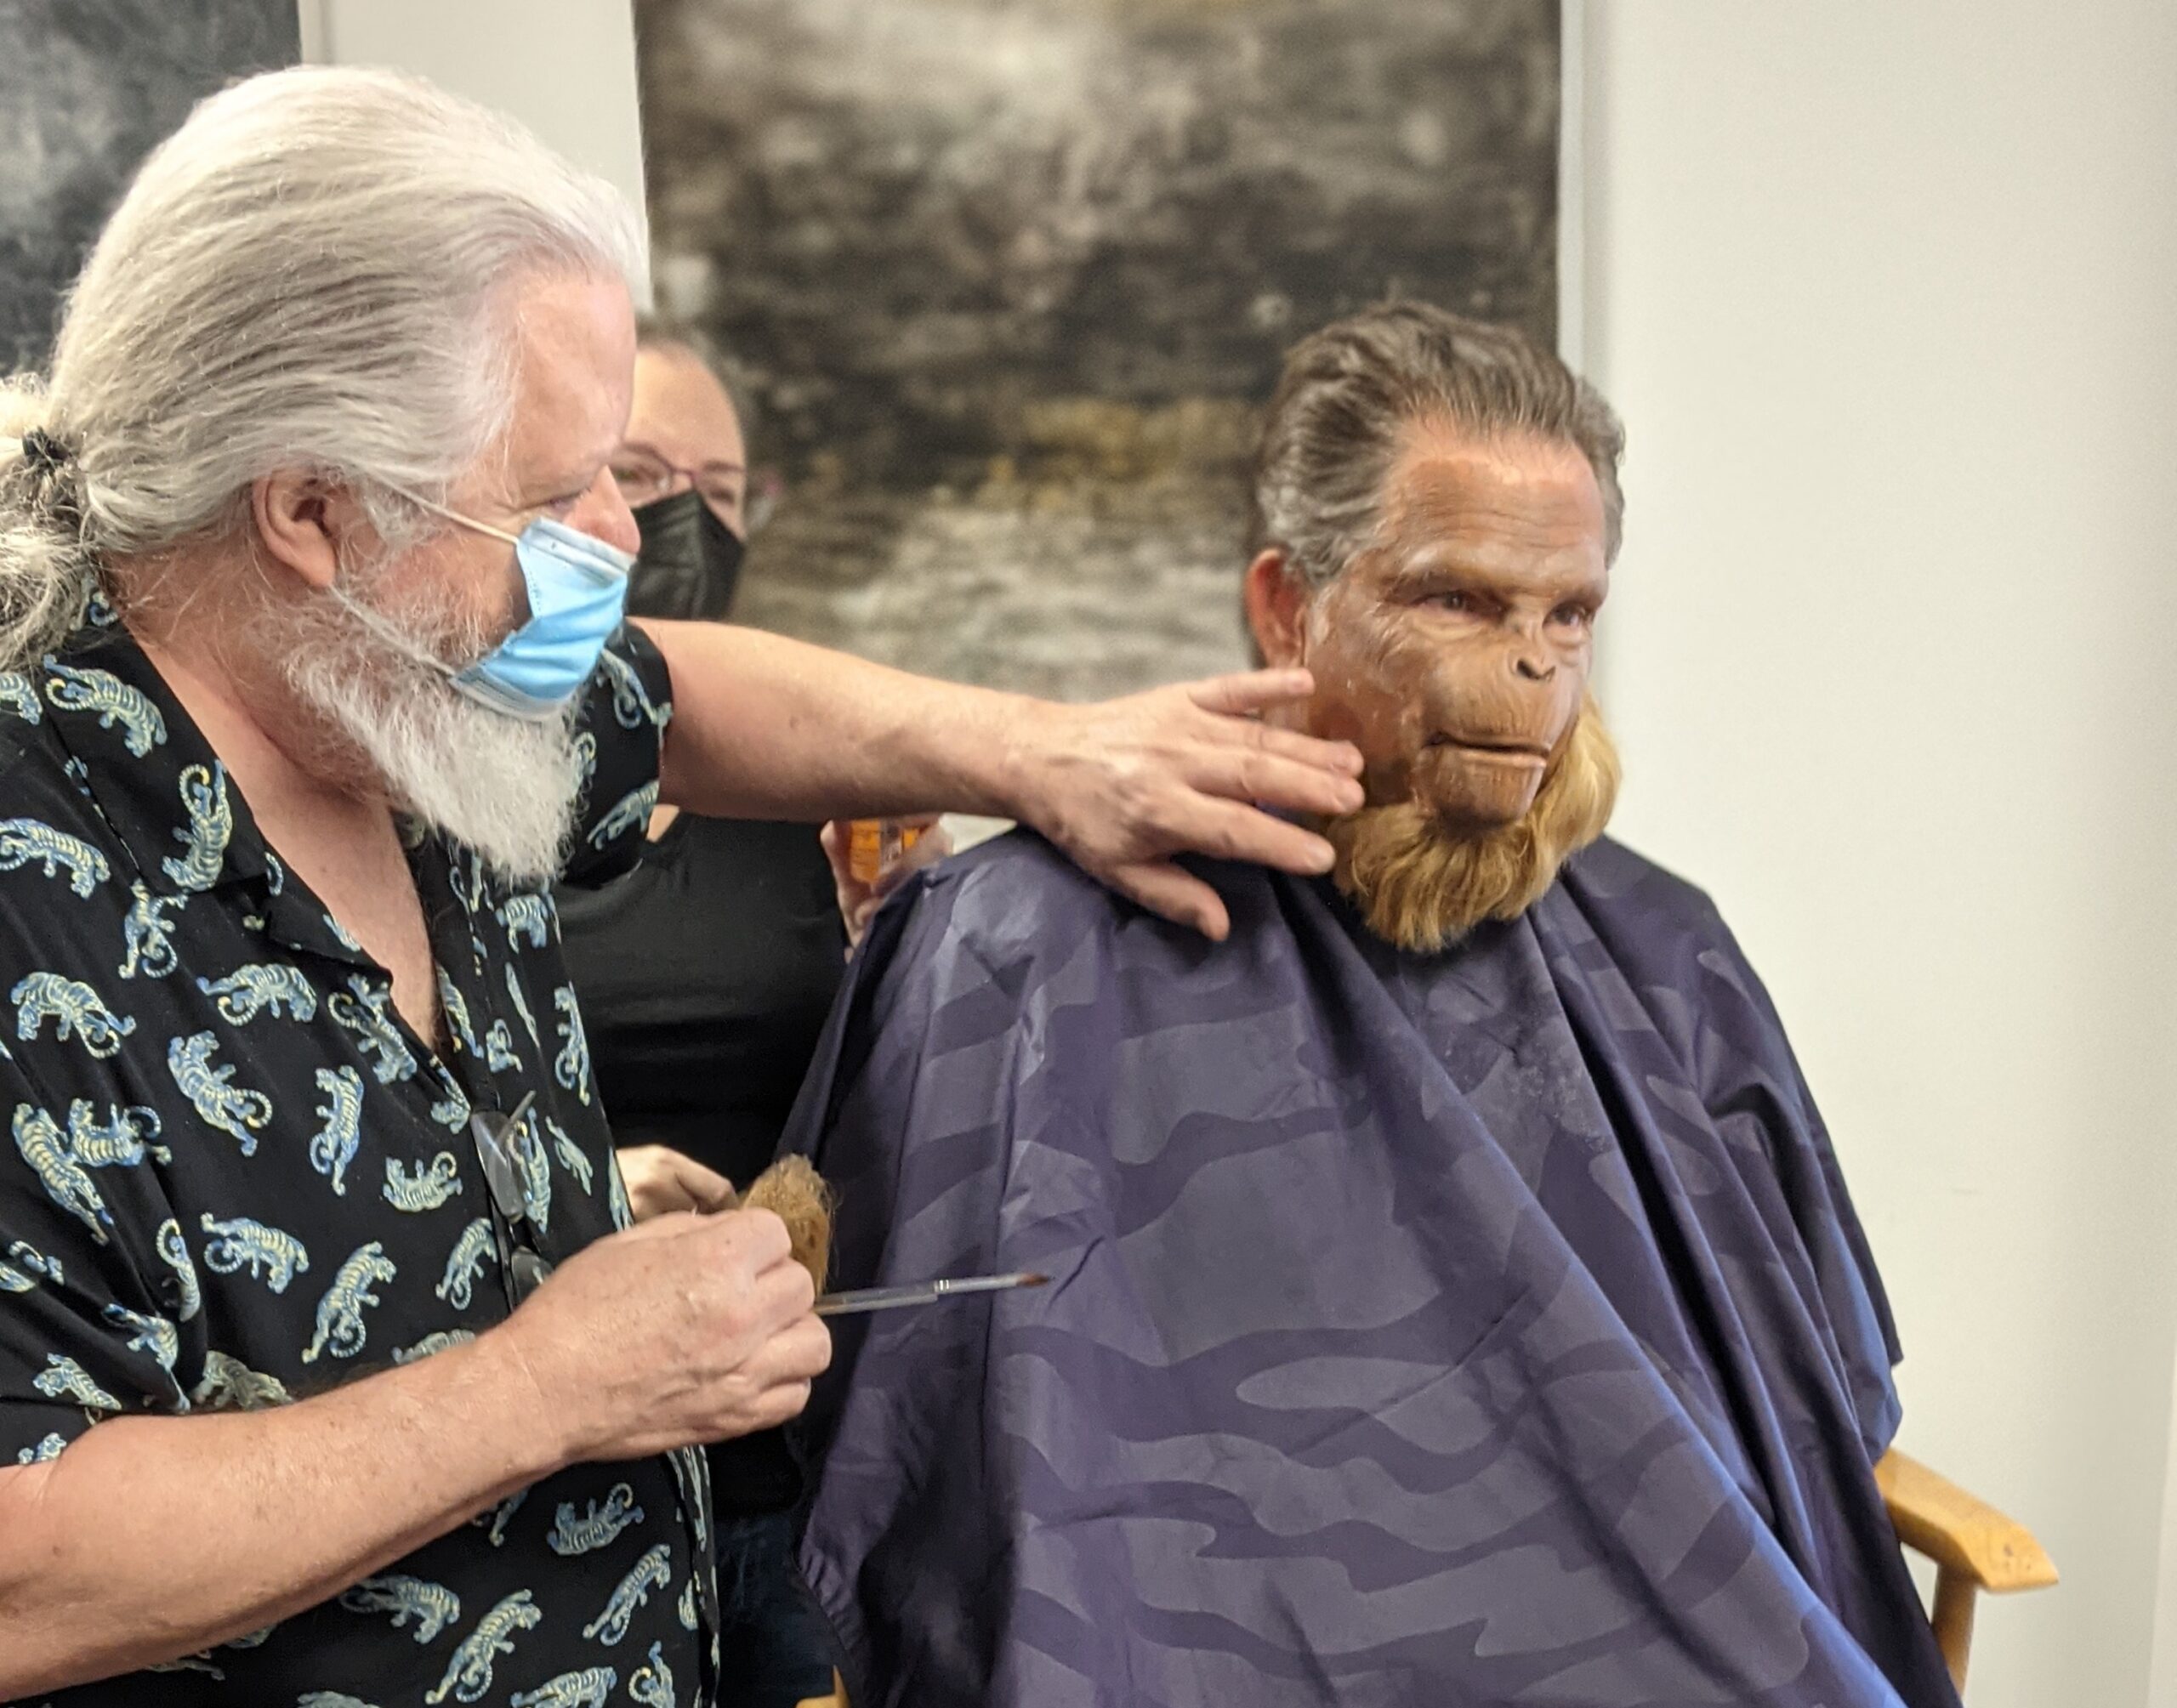 Dana Gould having his Dr. Zaius makeup applied